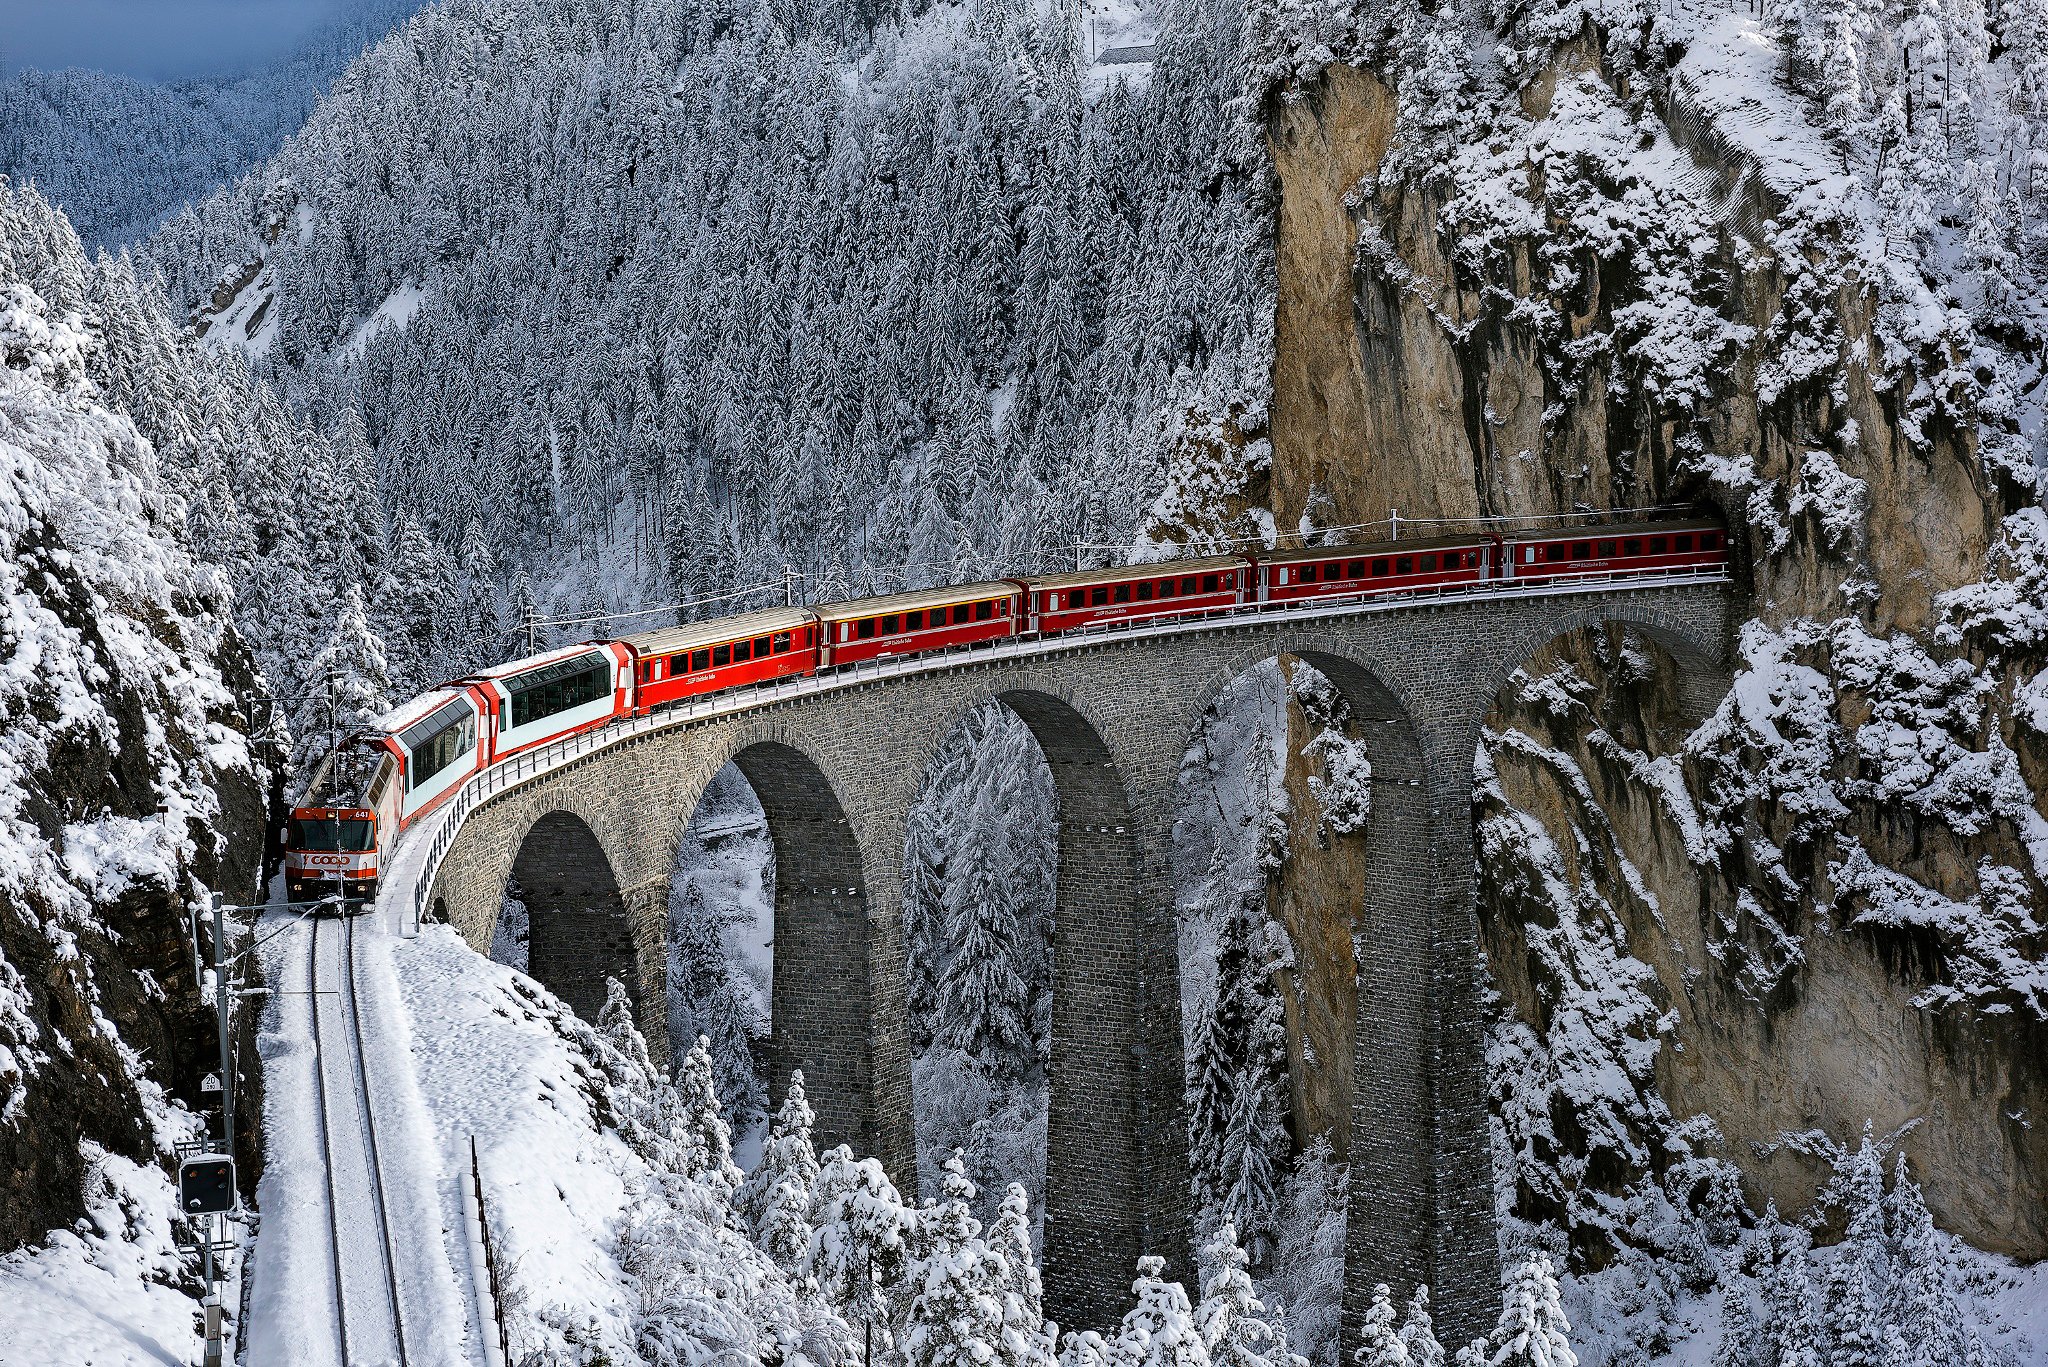 Train railway bridge winter snow rocks trees forest nature landscape ...